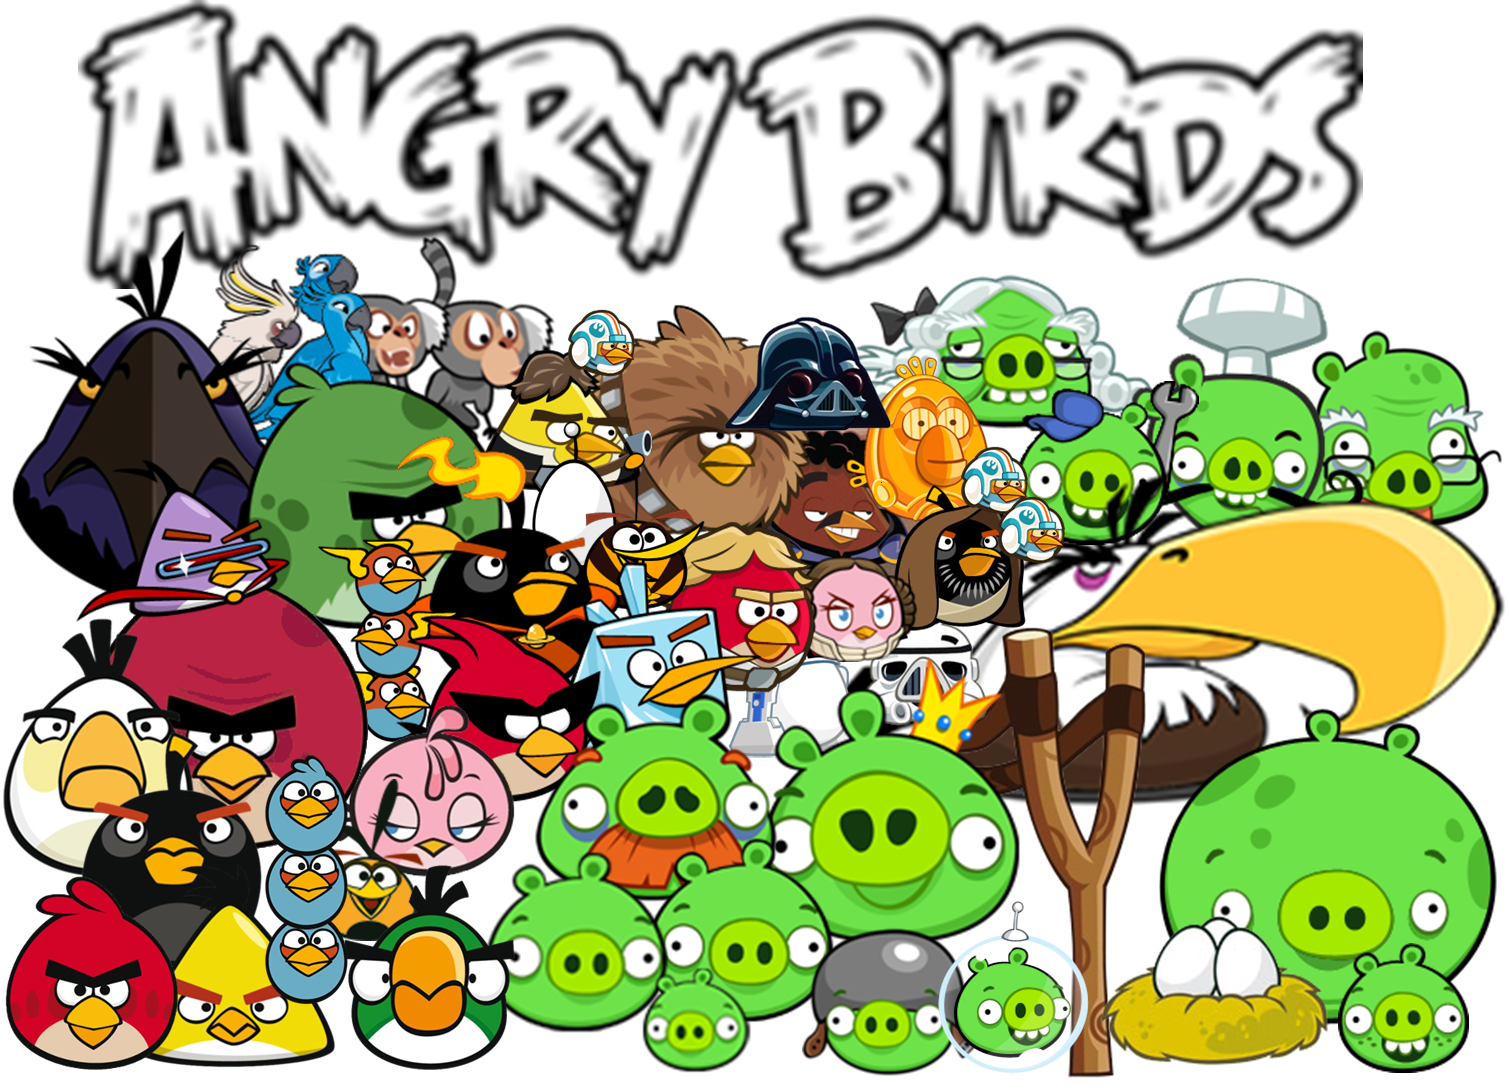 Angry birds friends. Энгри бердз френдс. Энгри бердз Вики. Злые птички друзья. Энгри бердз френдс картинки.